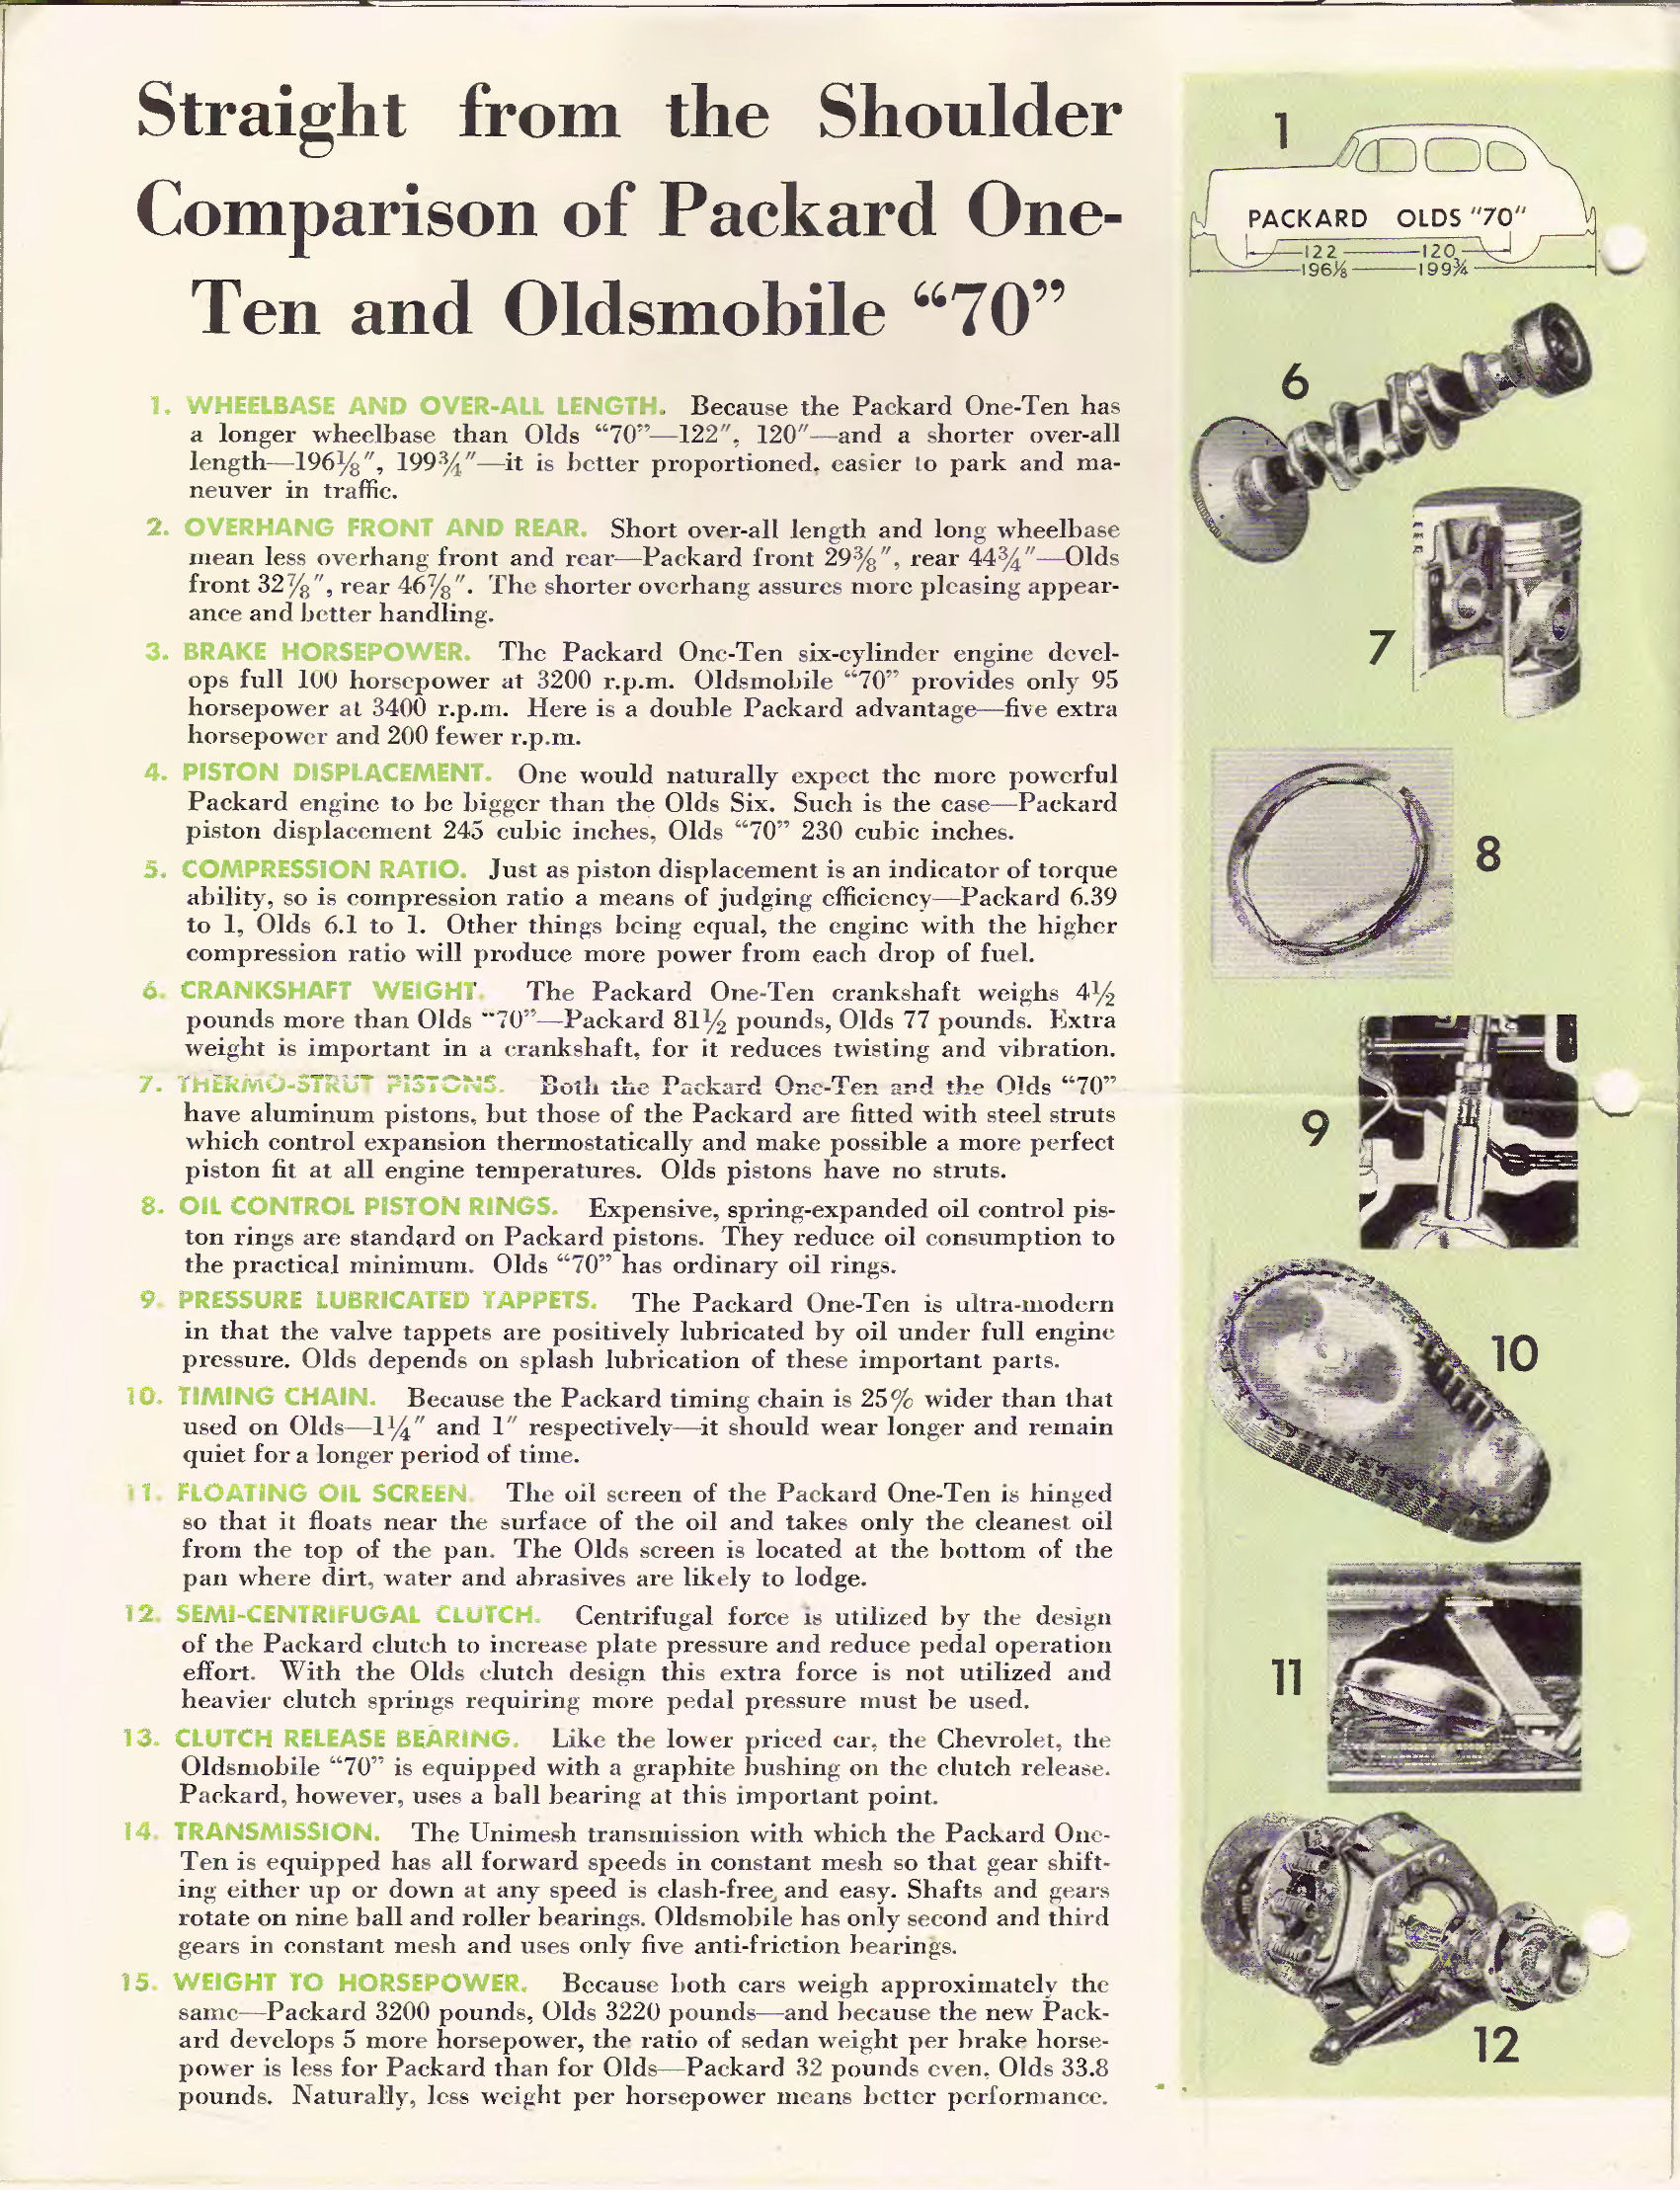 1940_Packard-Oldsmobile_Comparison-02